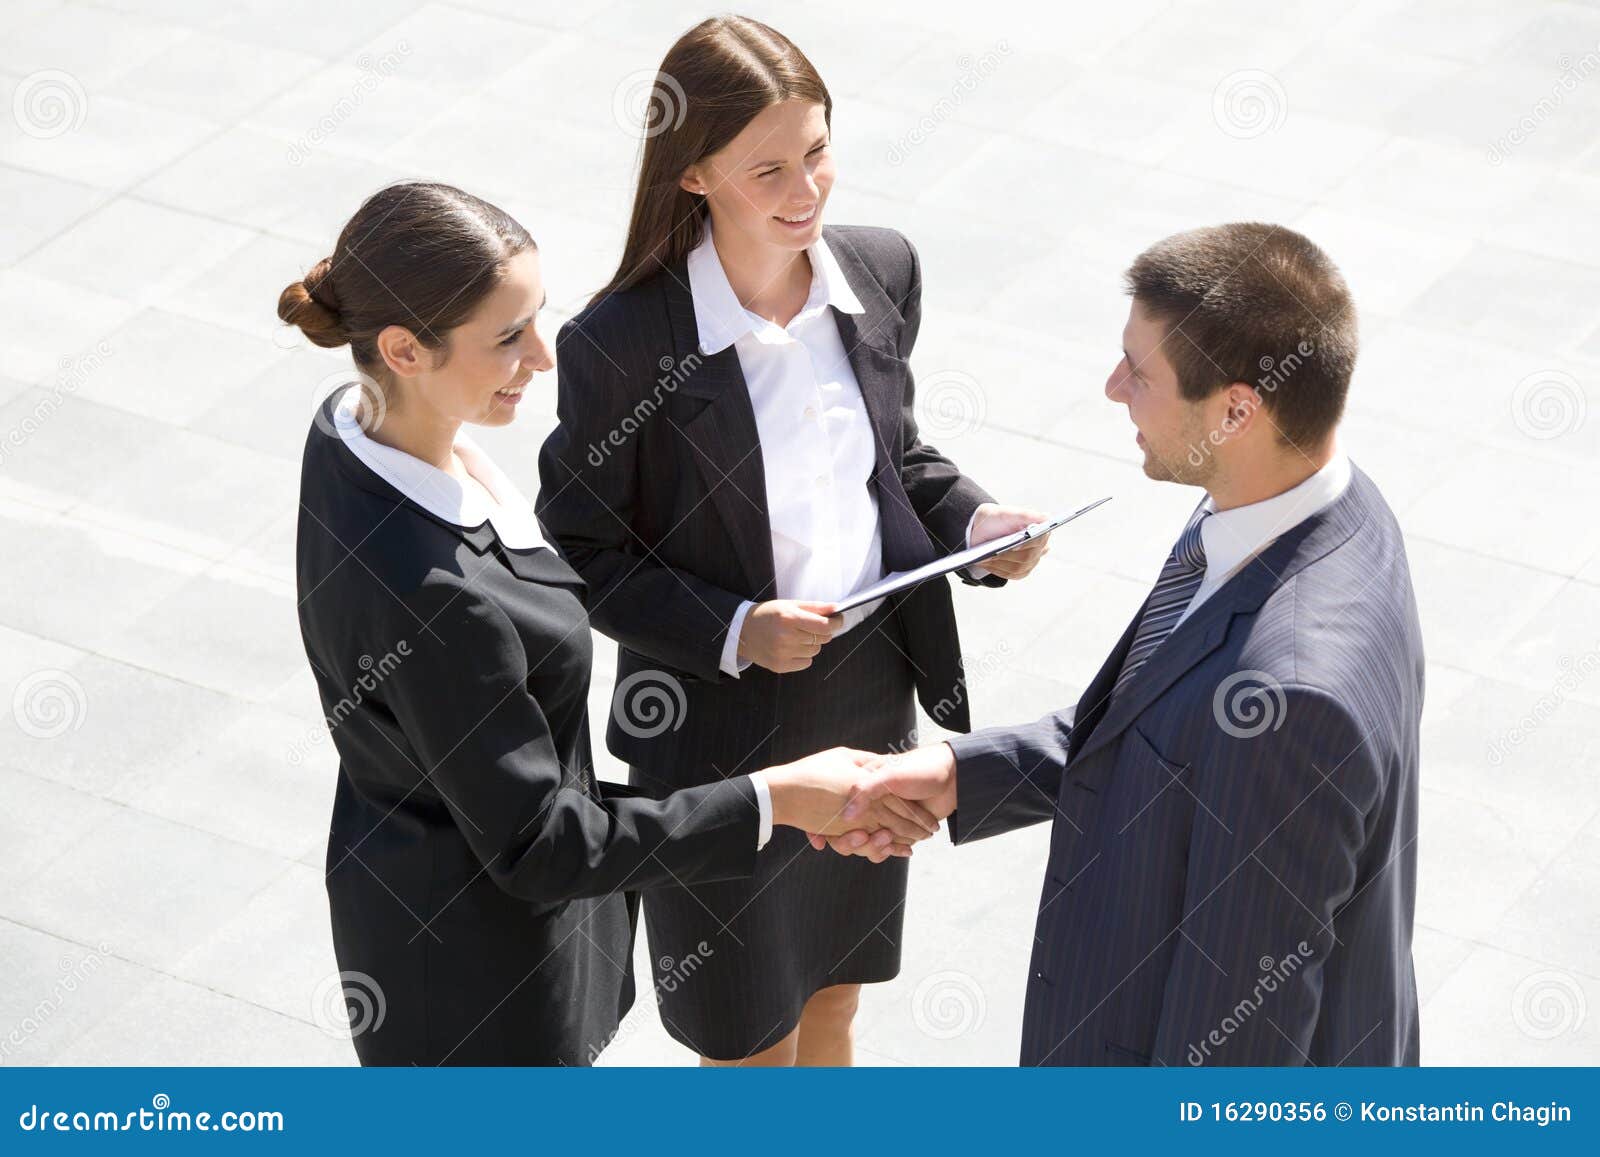 Handshake stock photo. Image of background, adult, corporate - 35737666